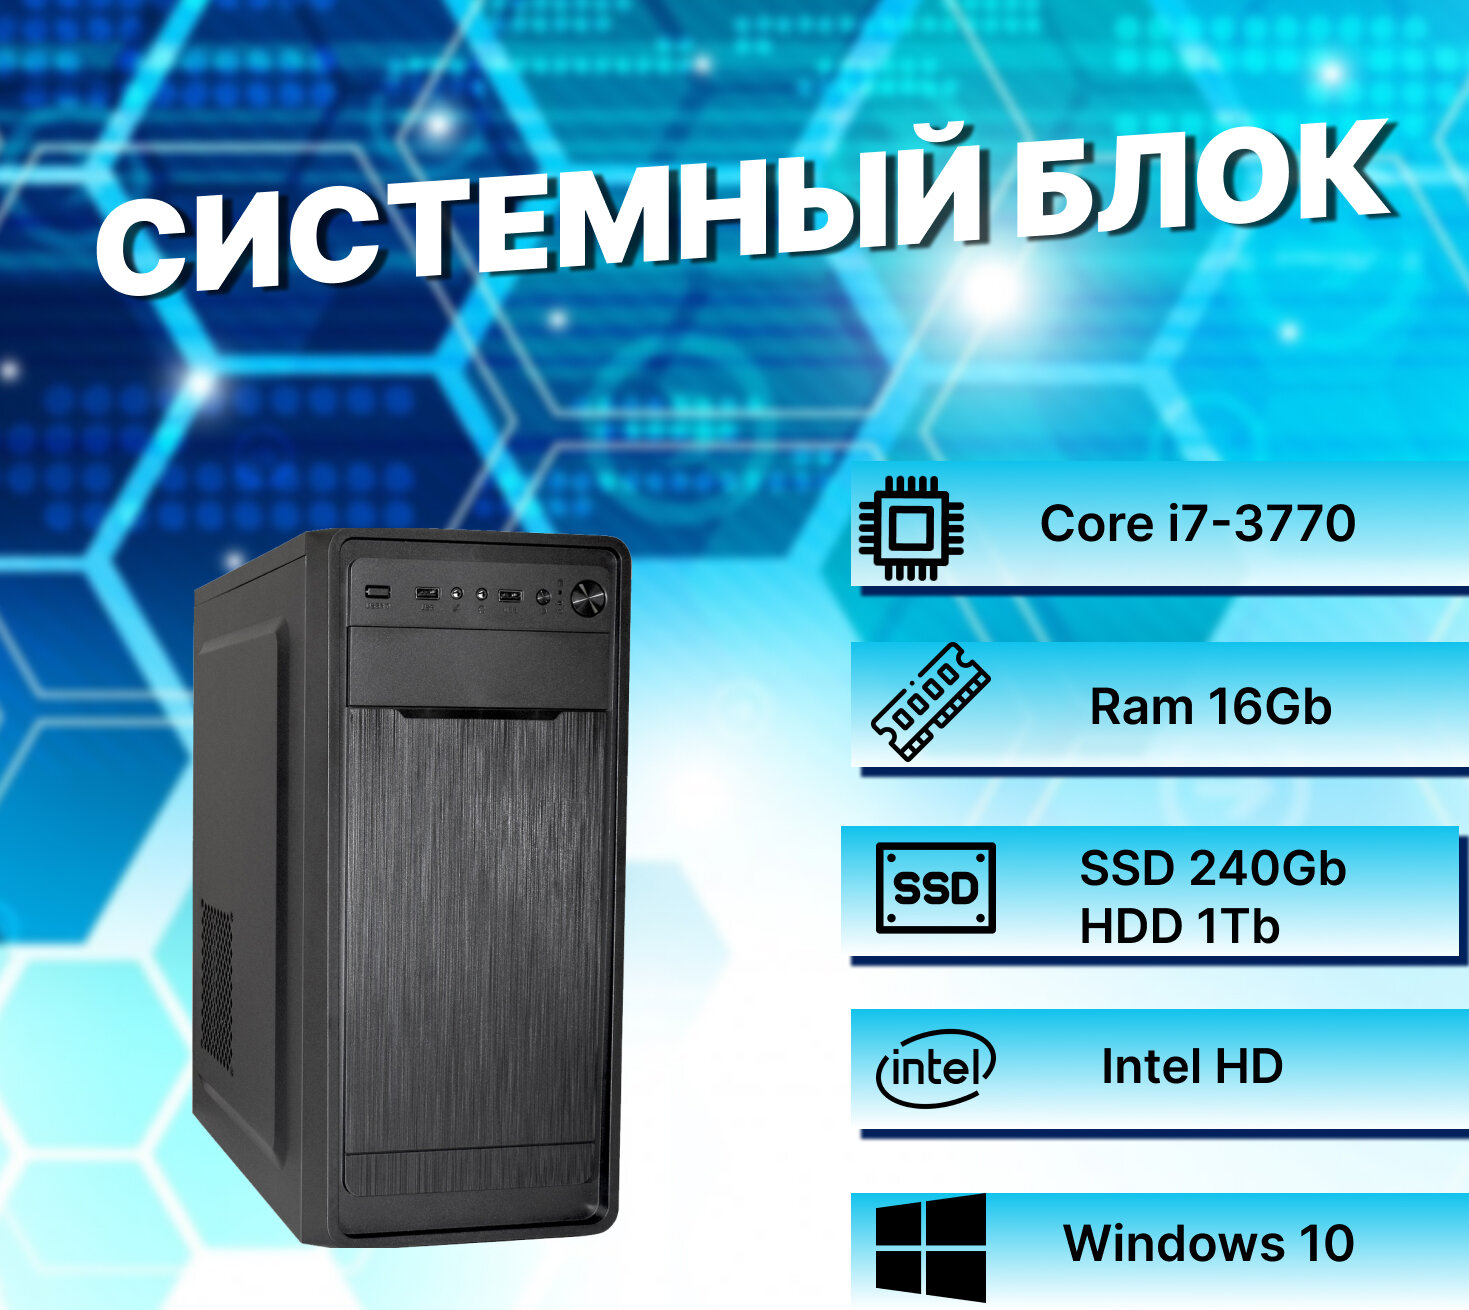 Системный блок Intel Core I7-3770 (3.4ГГц)/ RAM 16Gb/ SSD 240Gb/ HDD 1Tb/ Intel HD/ Windows 10 Pro